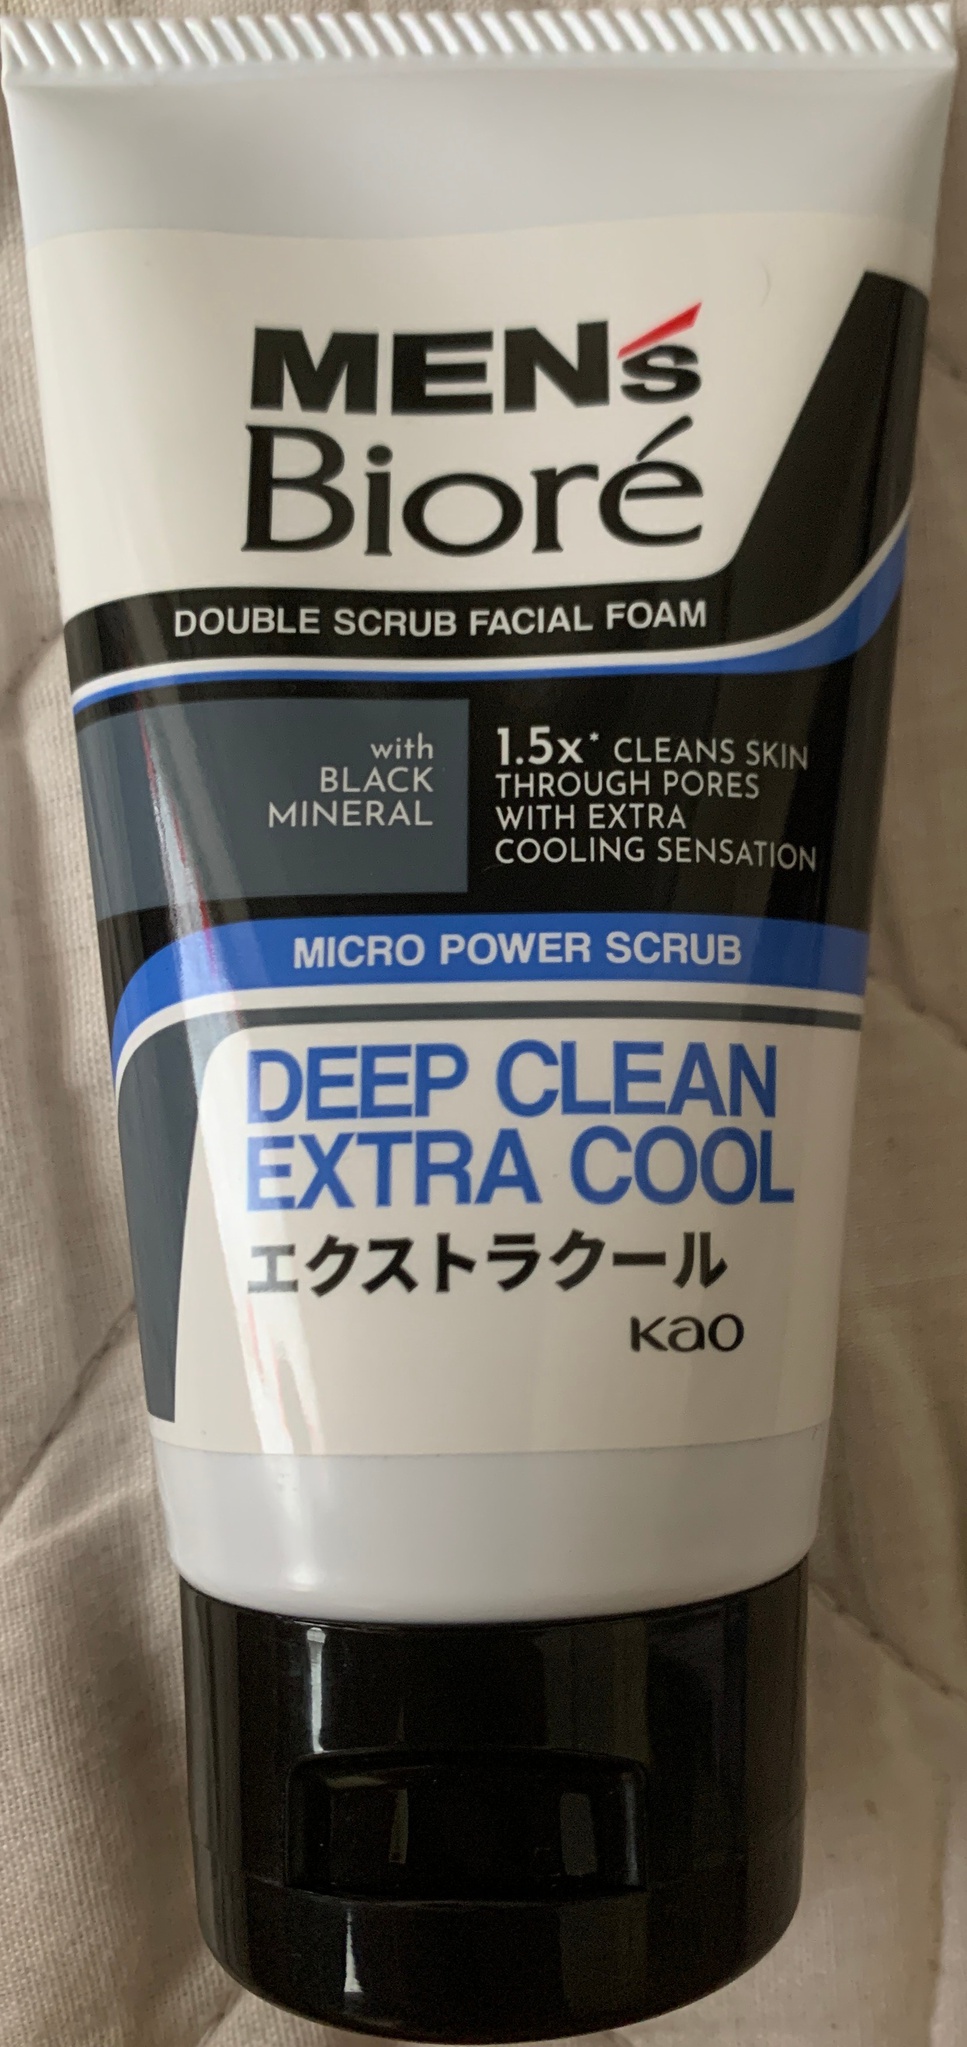 MEN'S BIORE Double Scrub Facial Foam Deep Clean Extra Cool